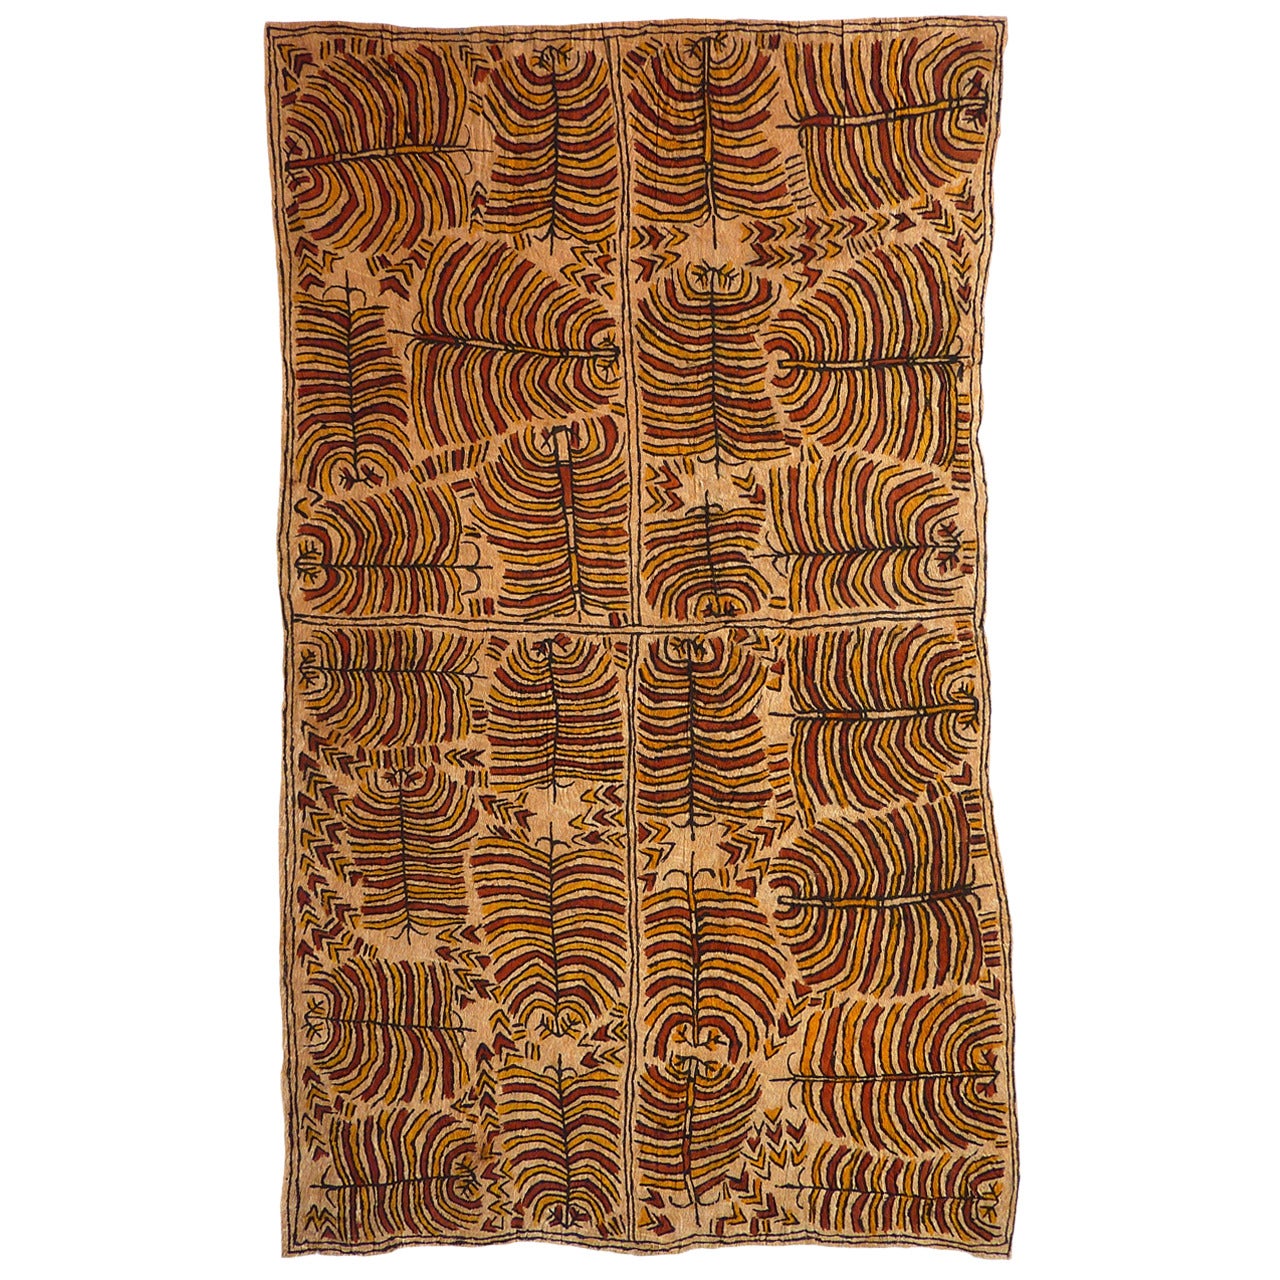 'Misaje' by Martha-Jean Uhamo, Australian Aboriginal Bark-Cloth Painting